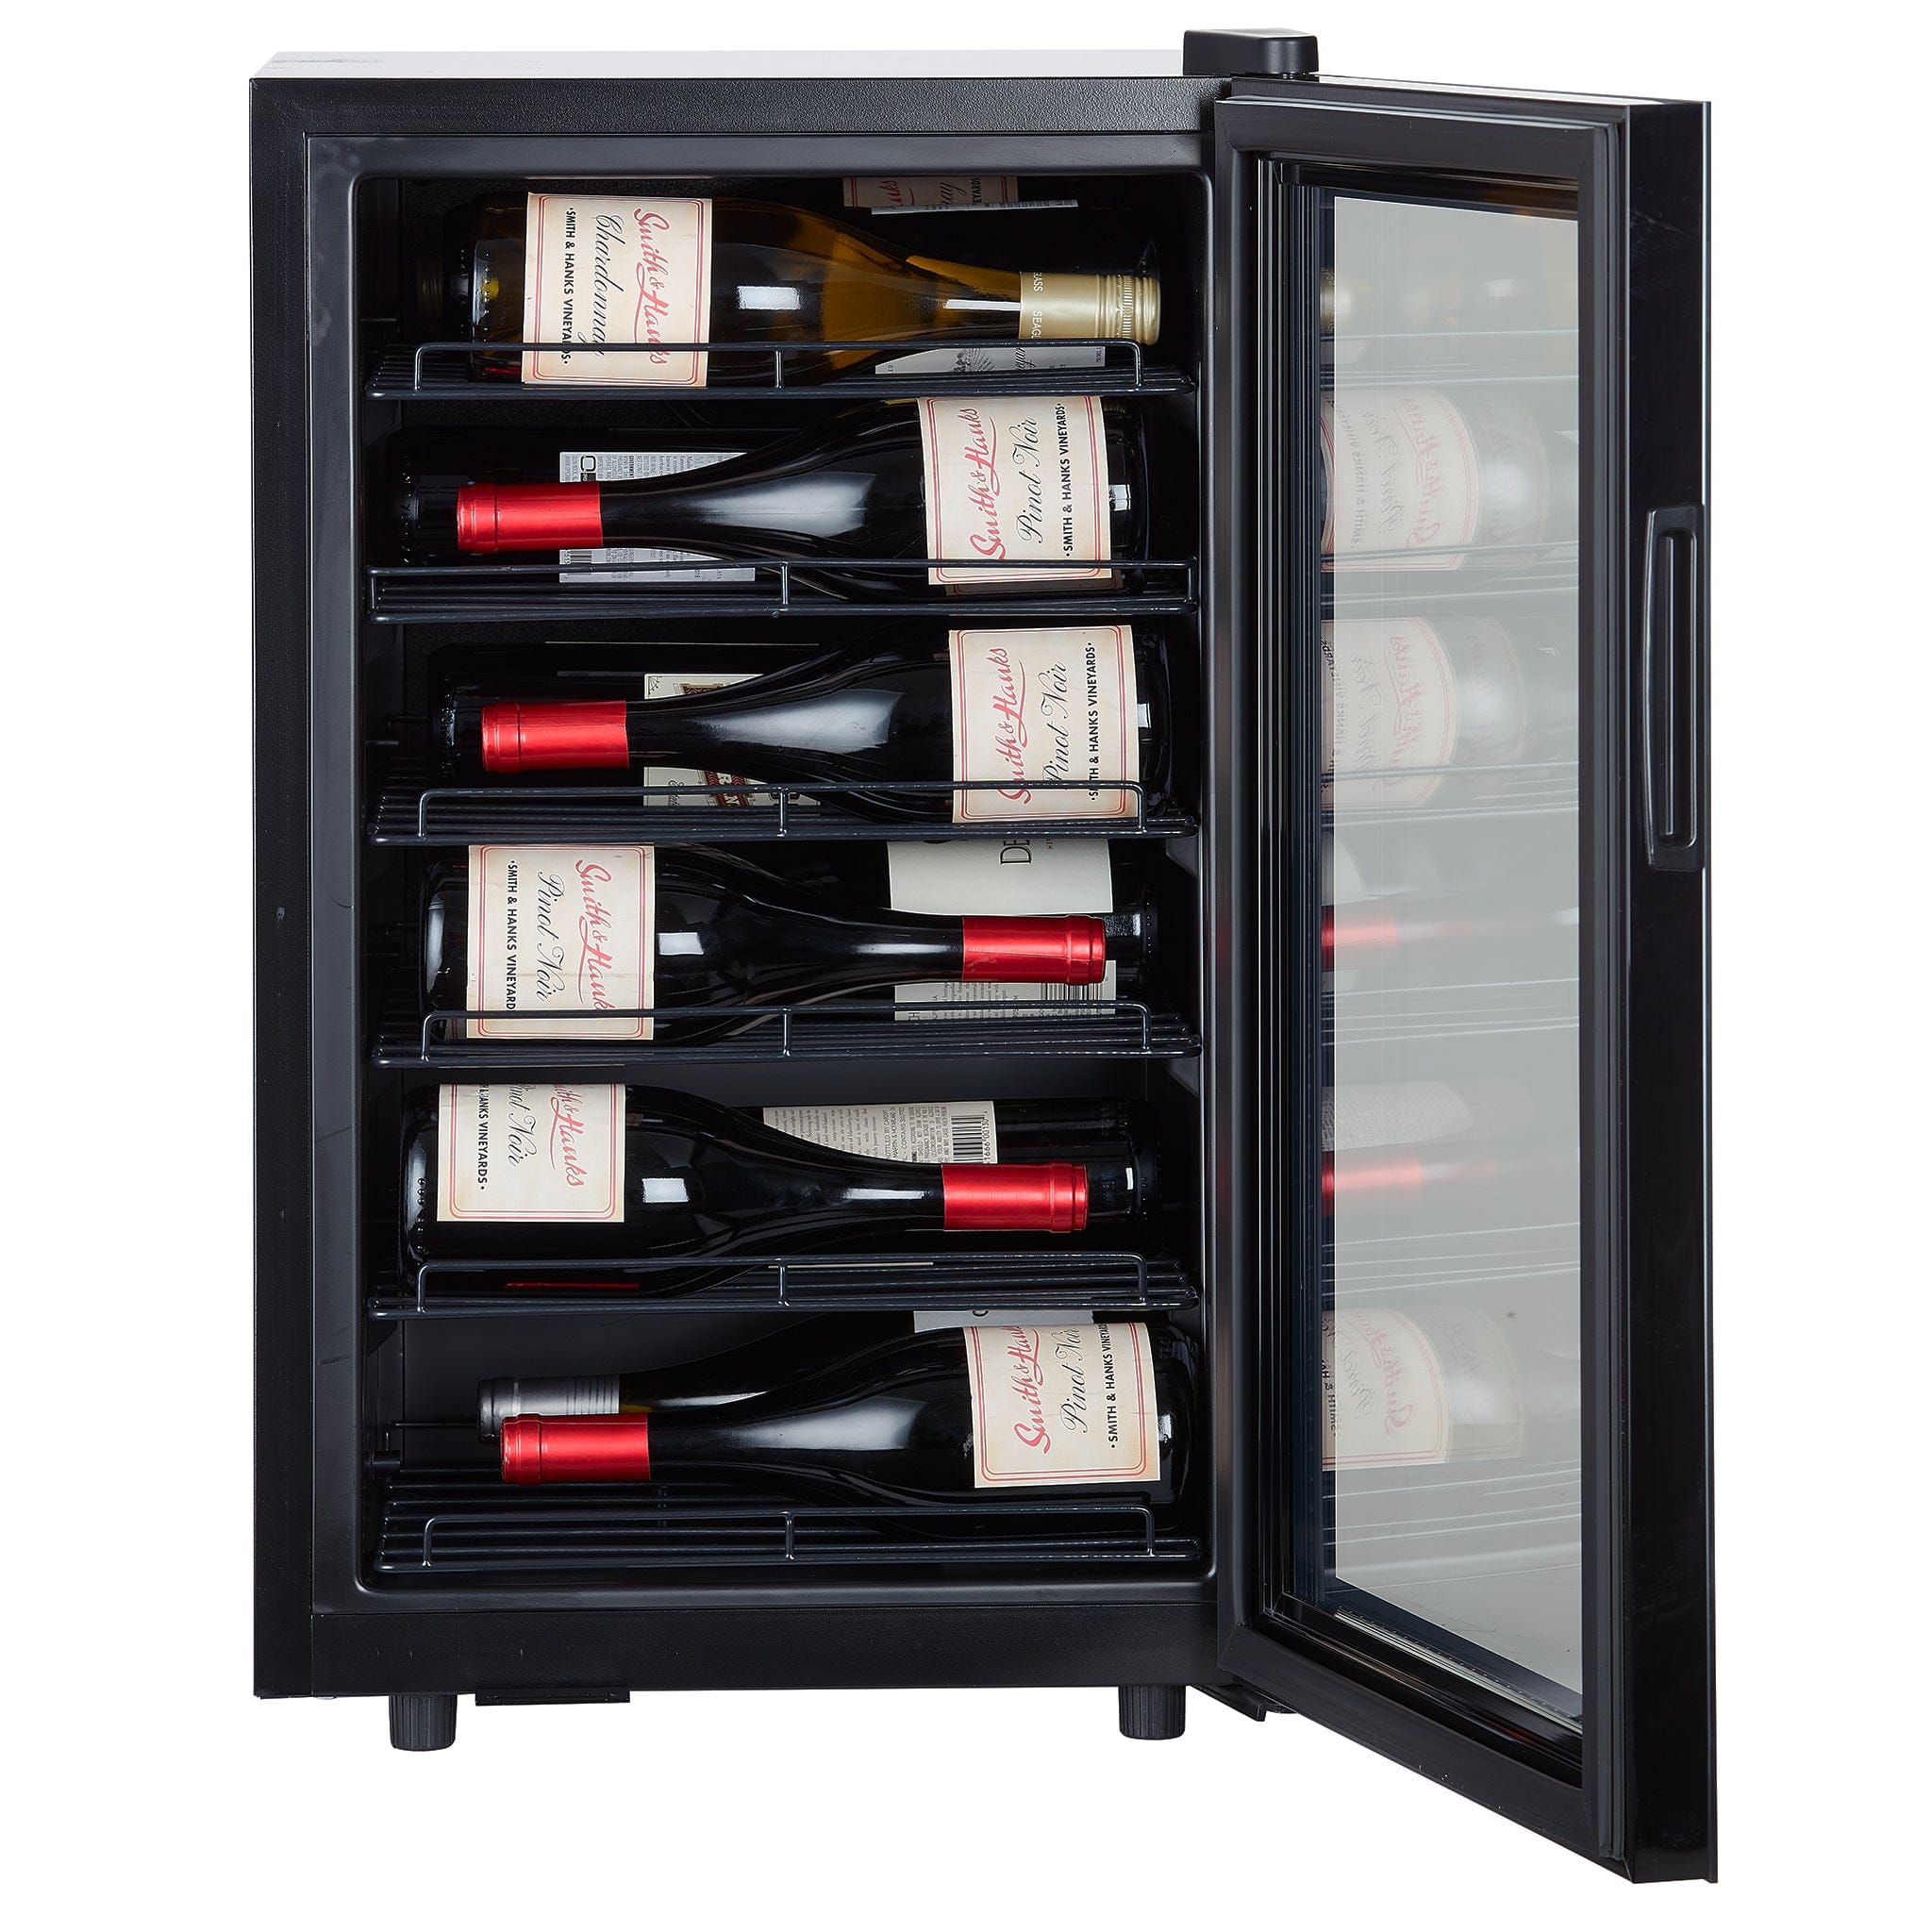 Smith & Hanks 22 Bottle Freestanding Wine Cooler RW70 Wine Coolers Empire